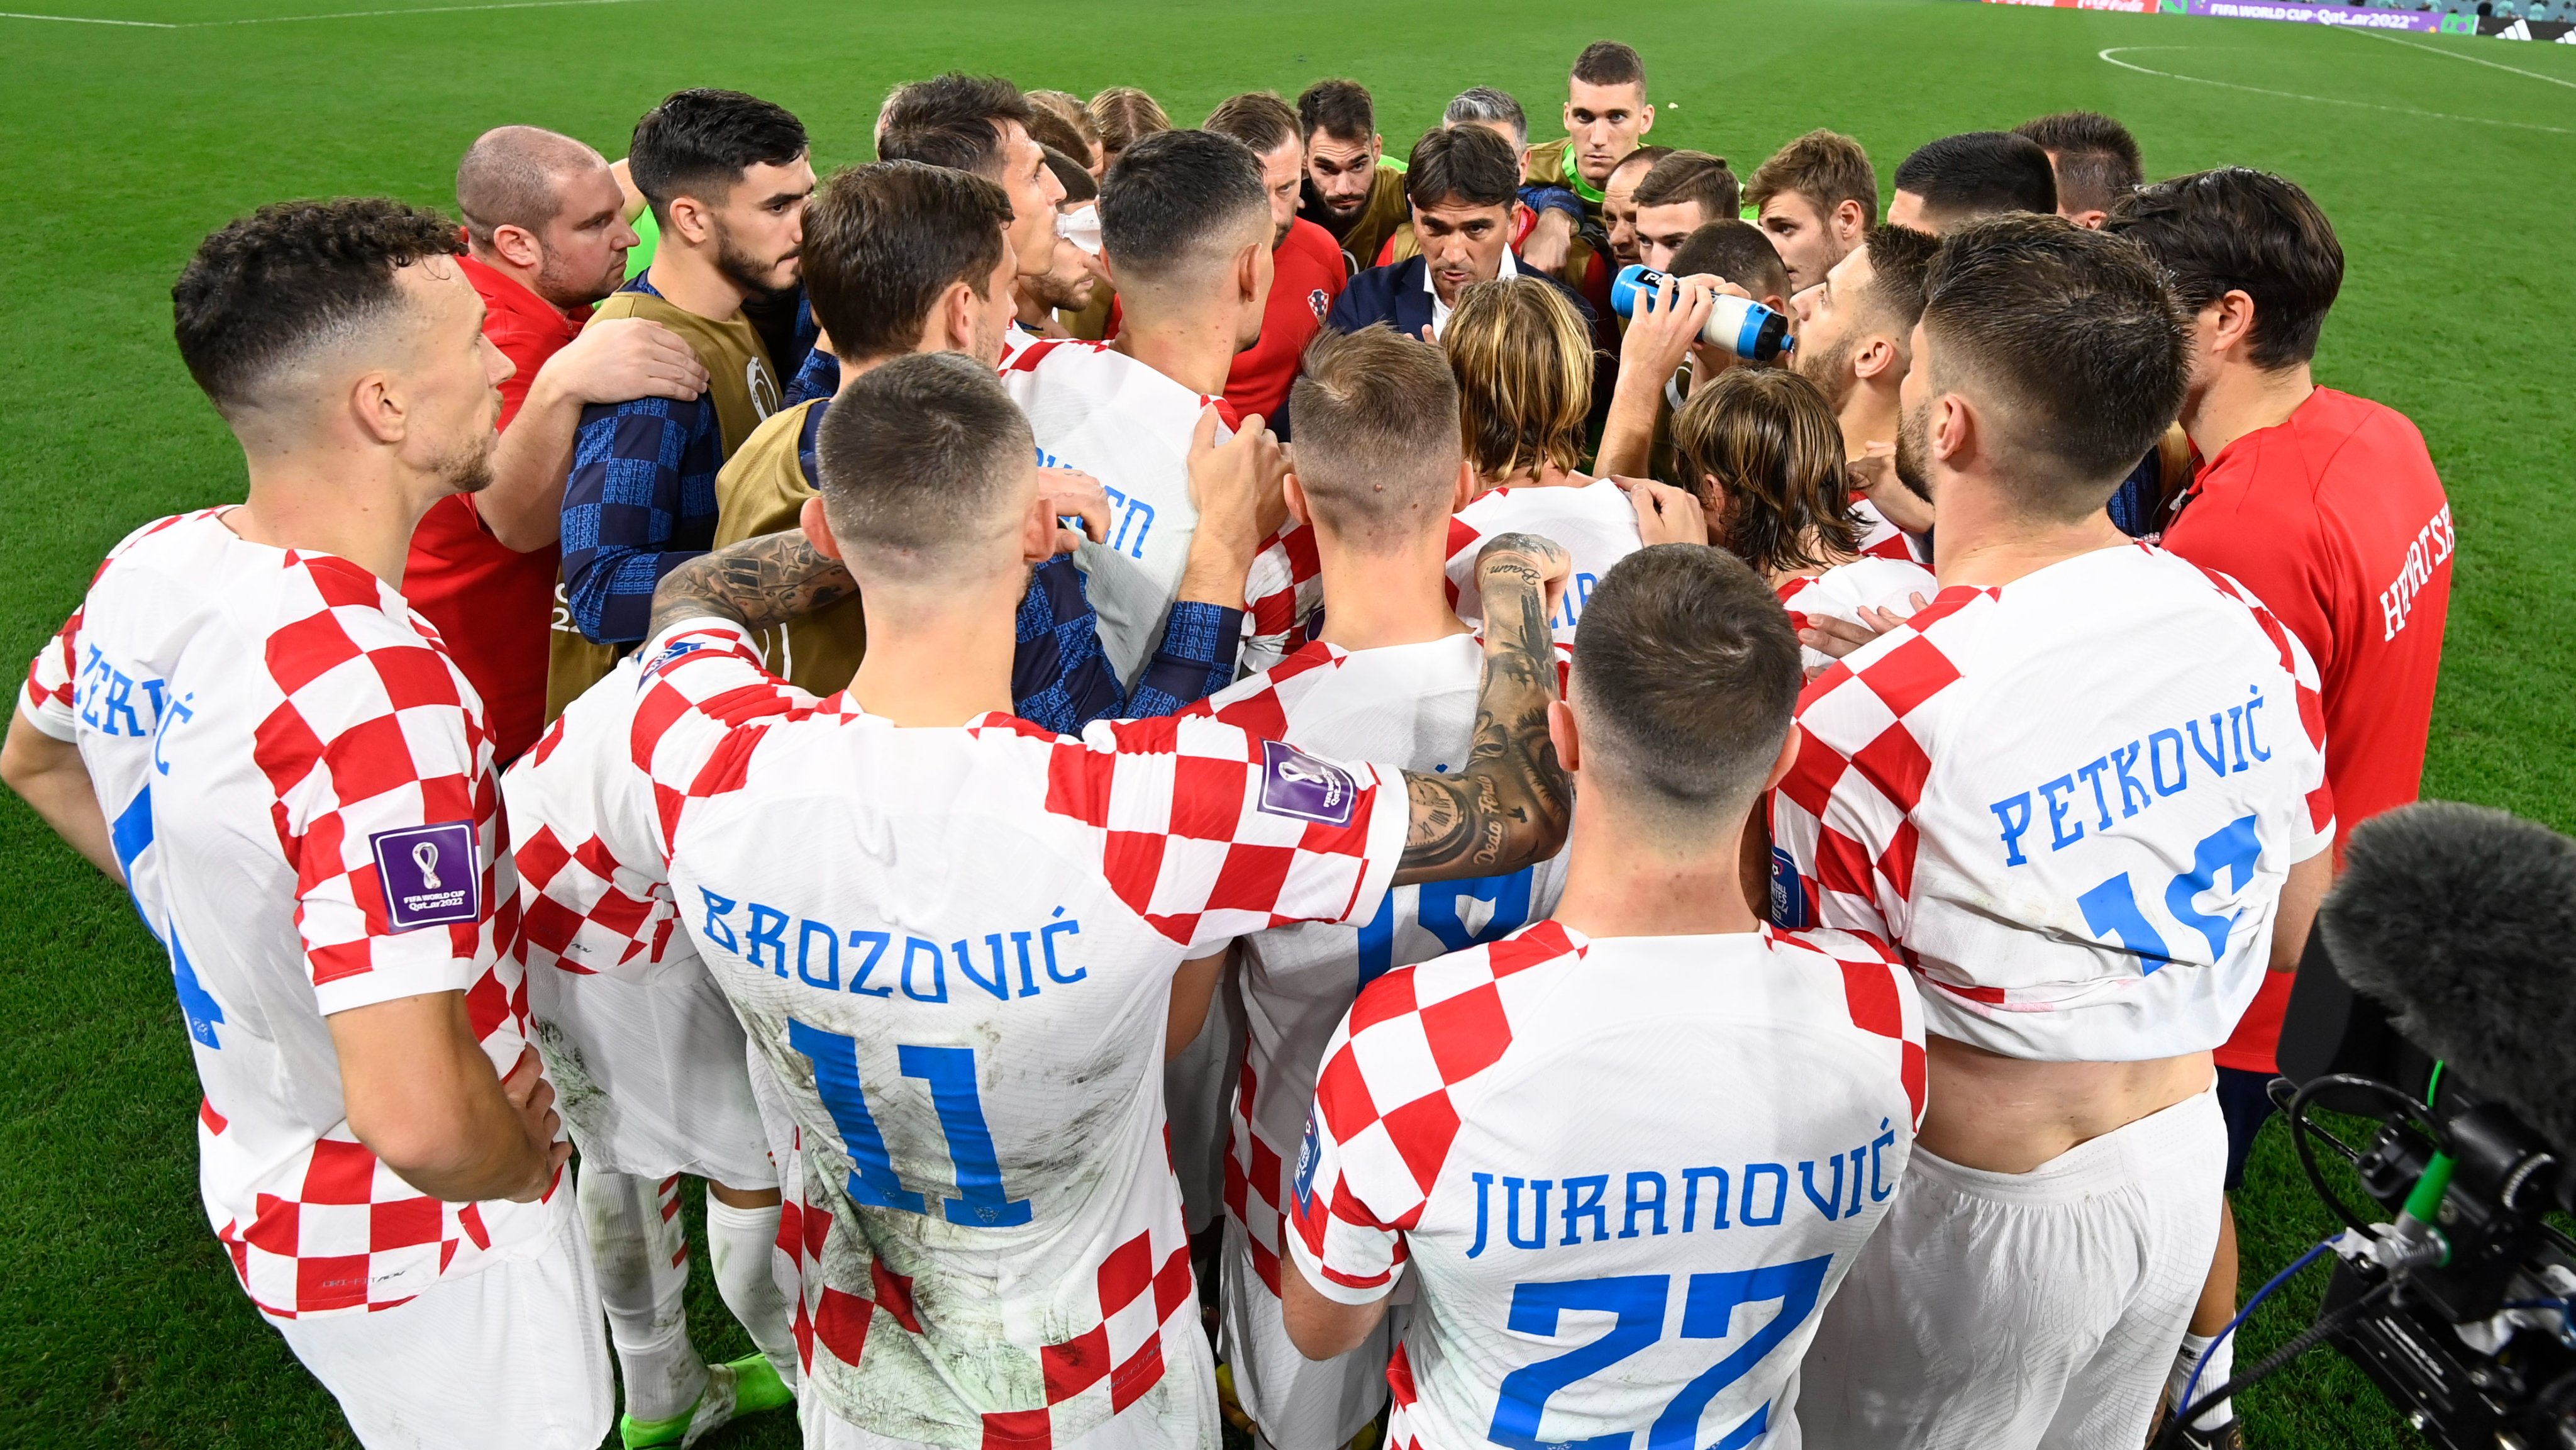 SP 2022: Hrvatska danas protiv Maroka - 'Ne malo, veliko finale'